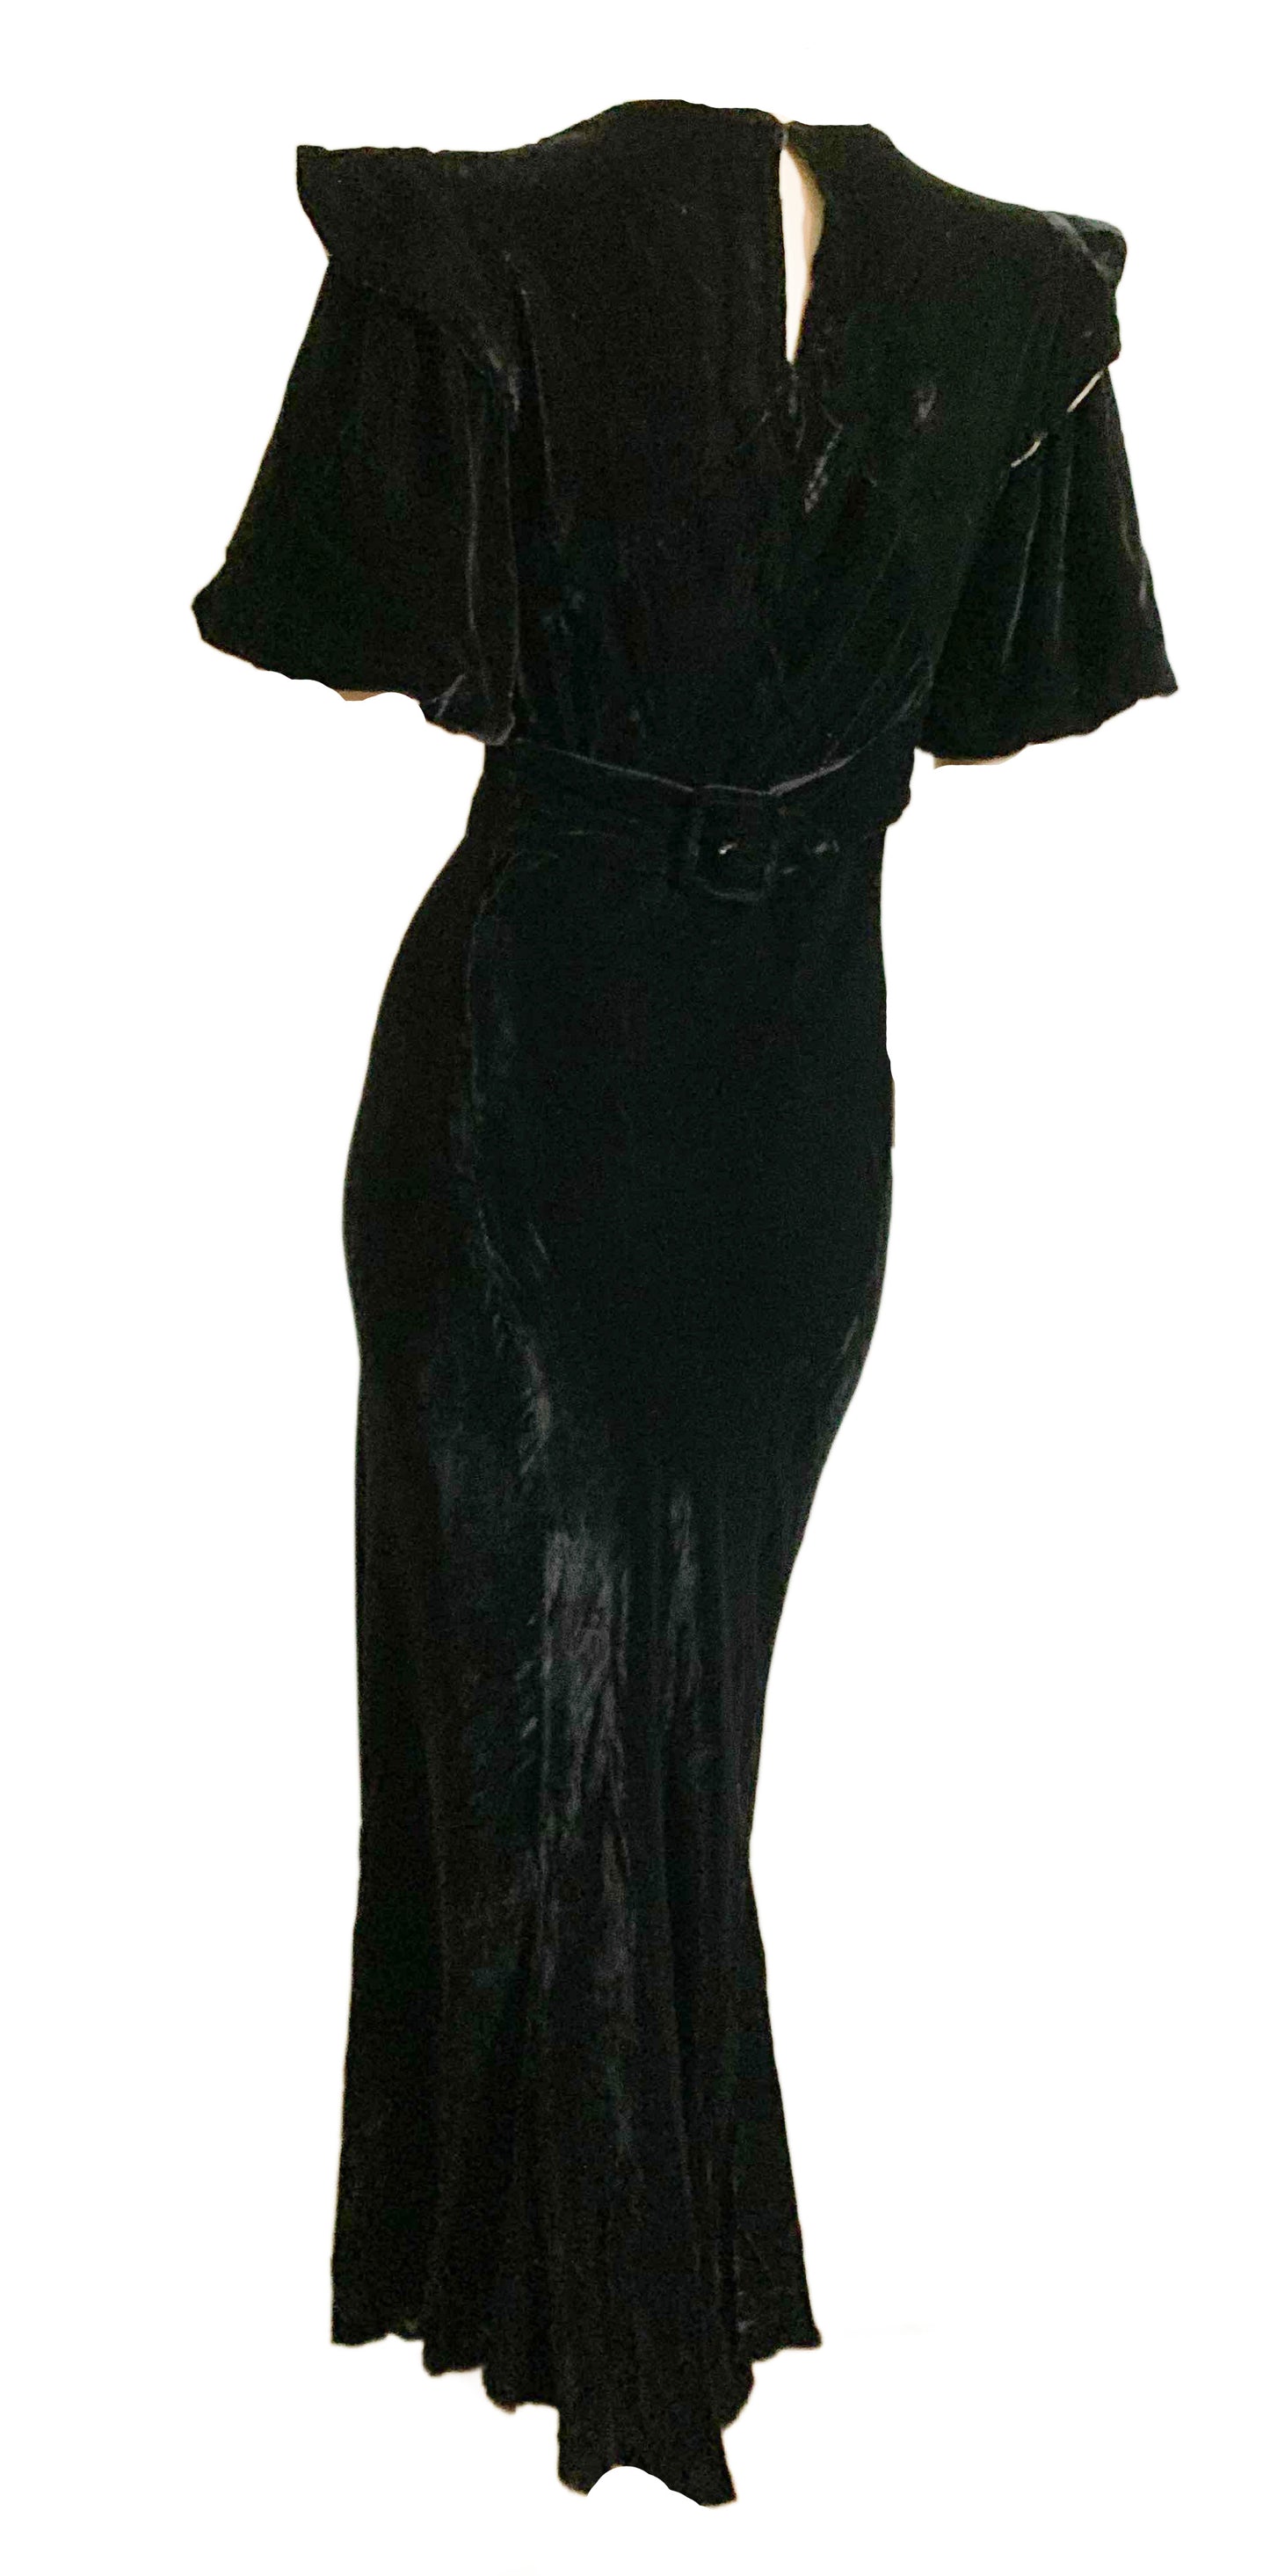 Ebony Silk Velvet Bias Cut Dress with Puff Sleeve and Art Deco Satin Back Shoulder Accents circa 1930s